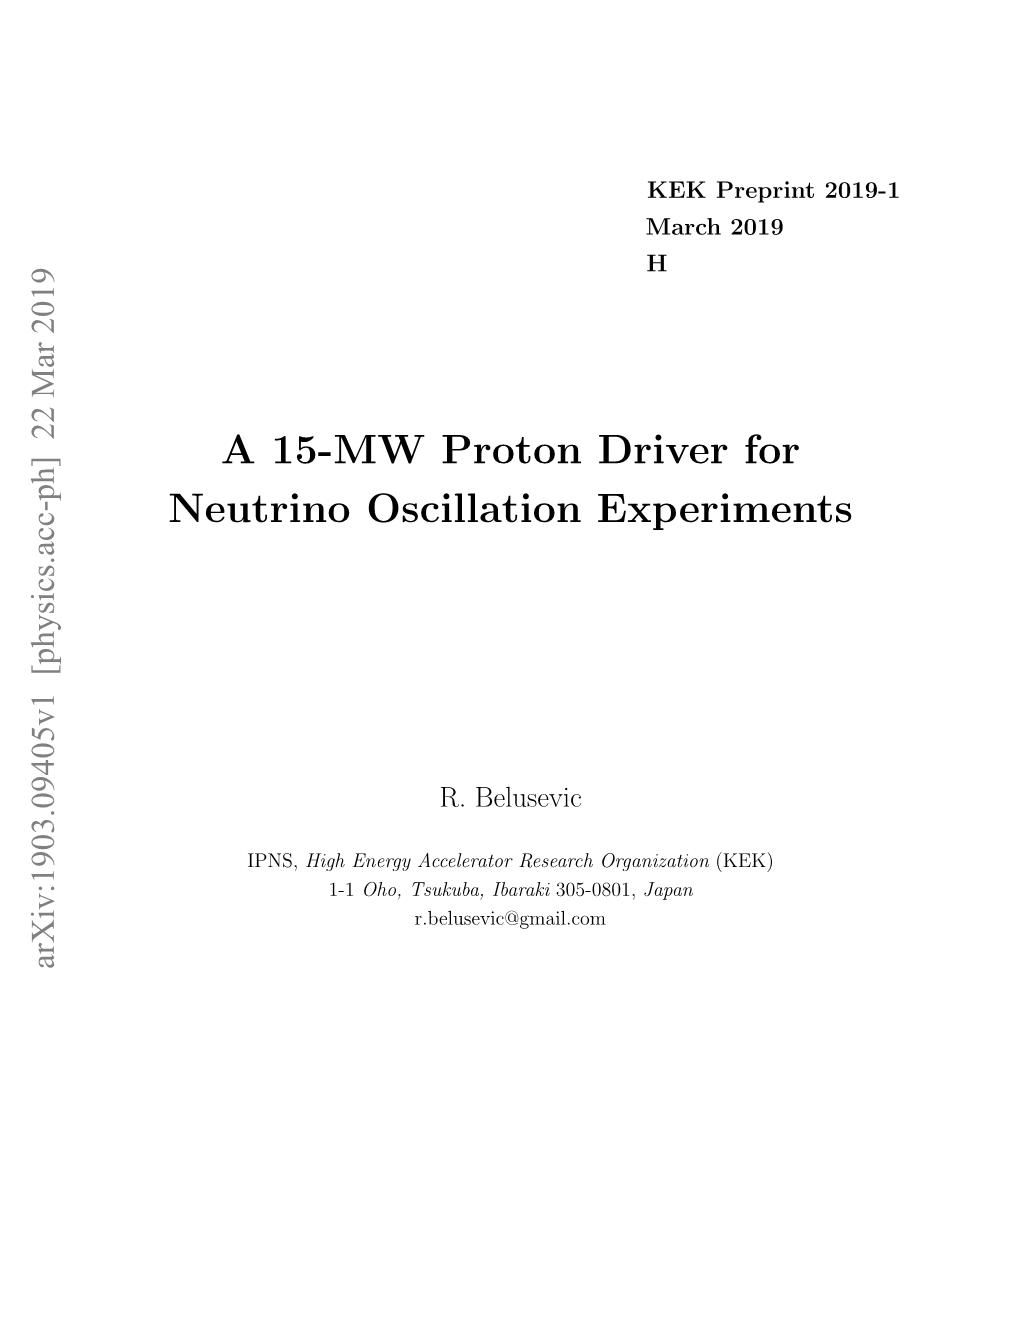 A 15-MW Proton Driver for Neutrino Oscillation Experiments